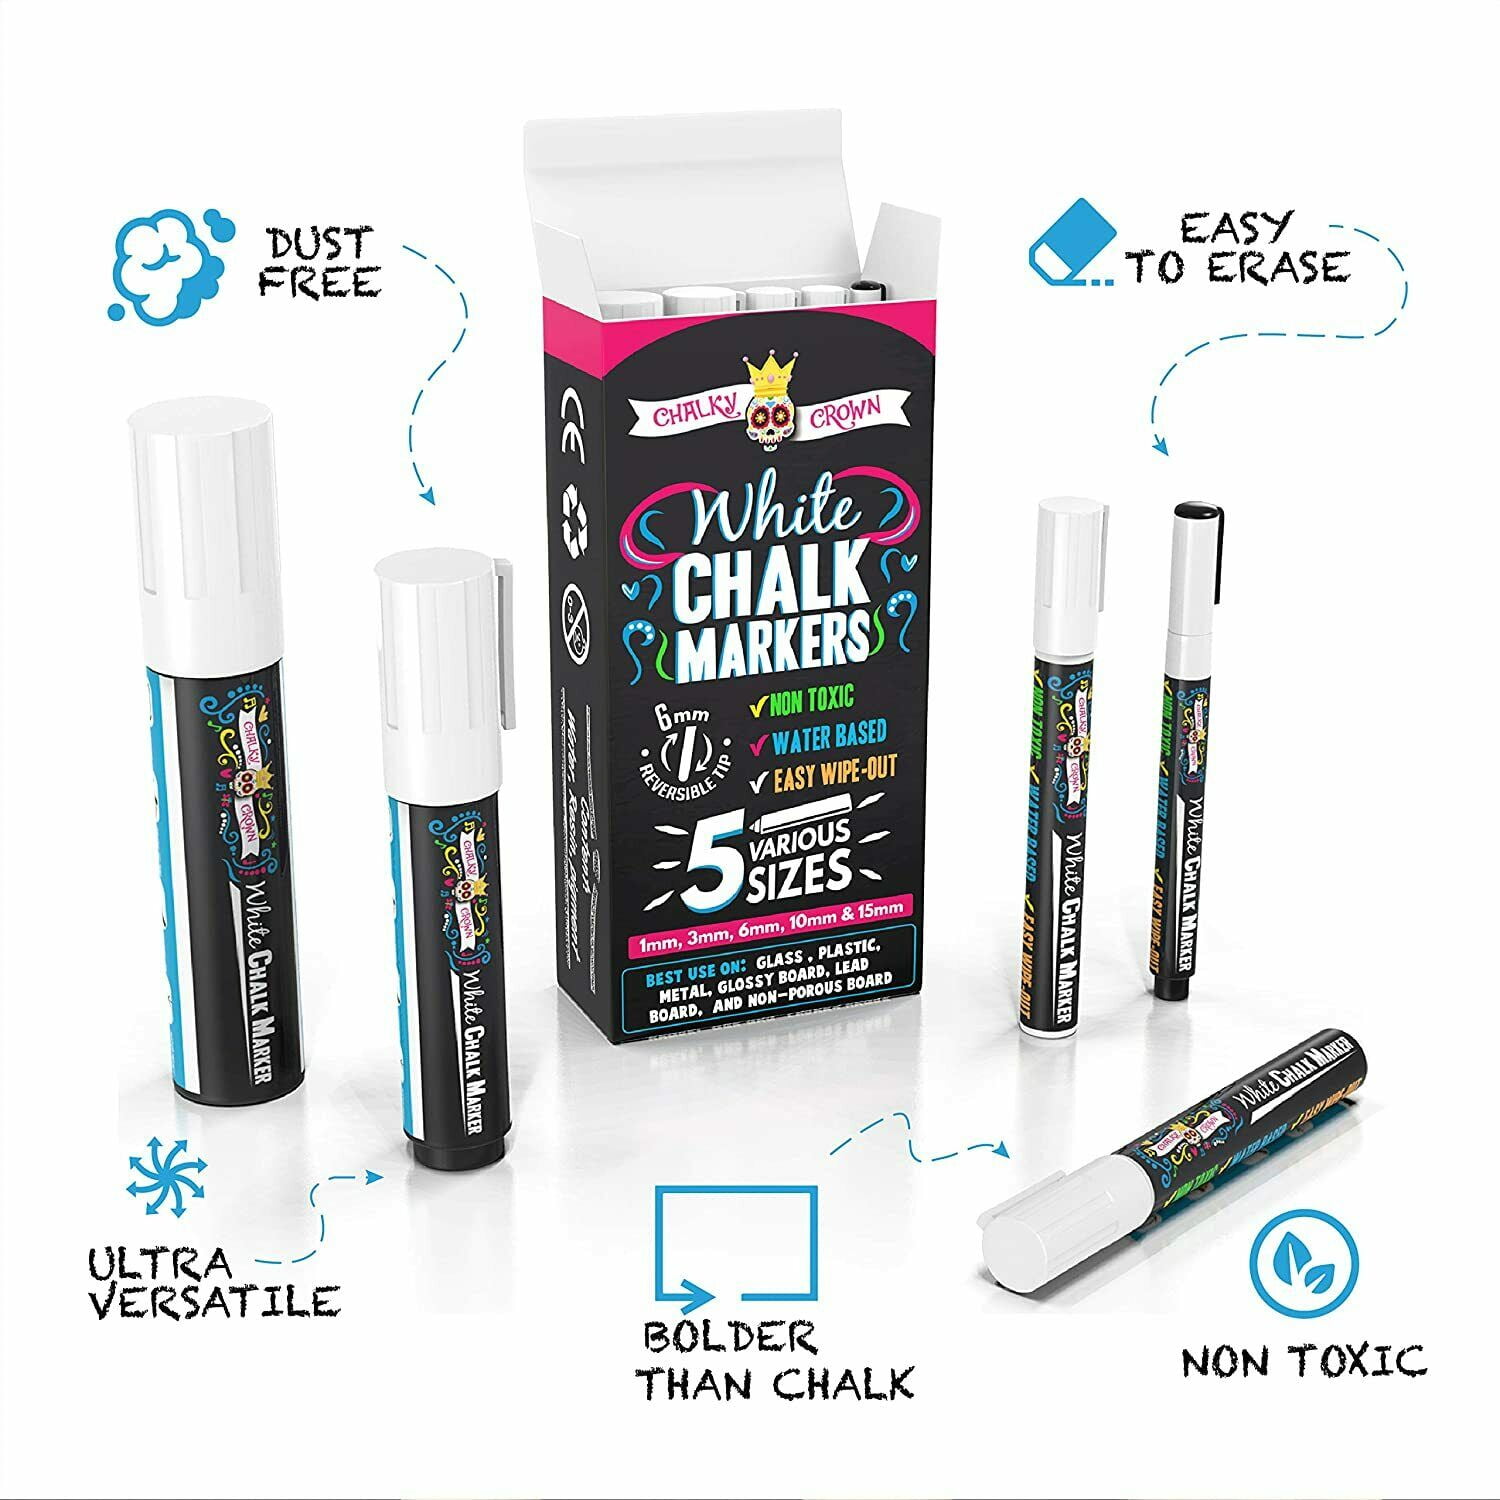  TIIKKASI Liquid Chalk Markers 8 Pack, Vivid Neon Colors 6mm,  Wet Erase Reversible Bold & Chisel Tip for Dry Erase Chalkboard Blackboard  & Whiteboard, Glass Car Windows, School Kids Art